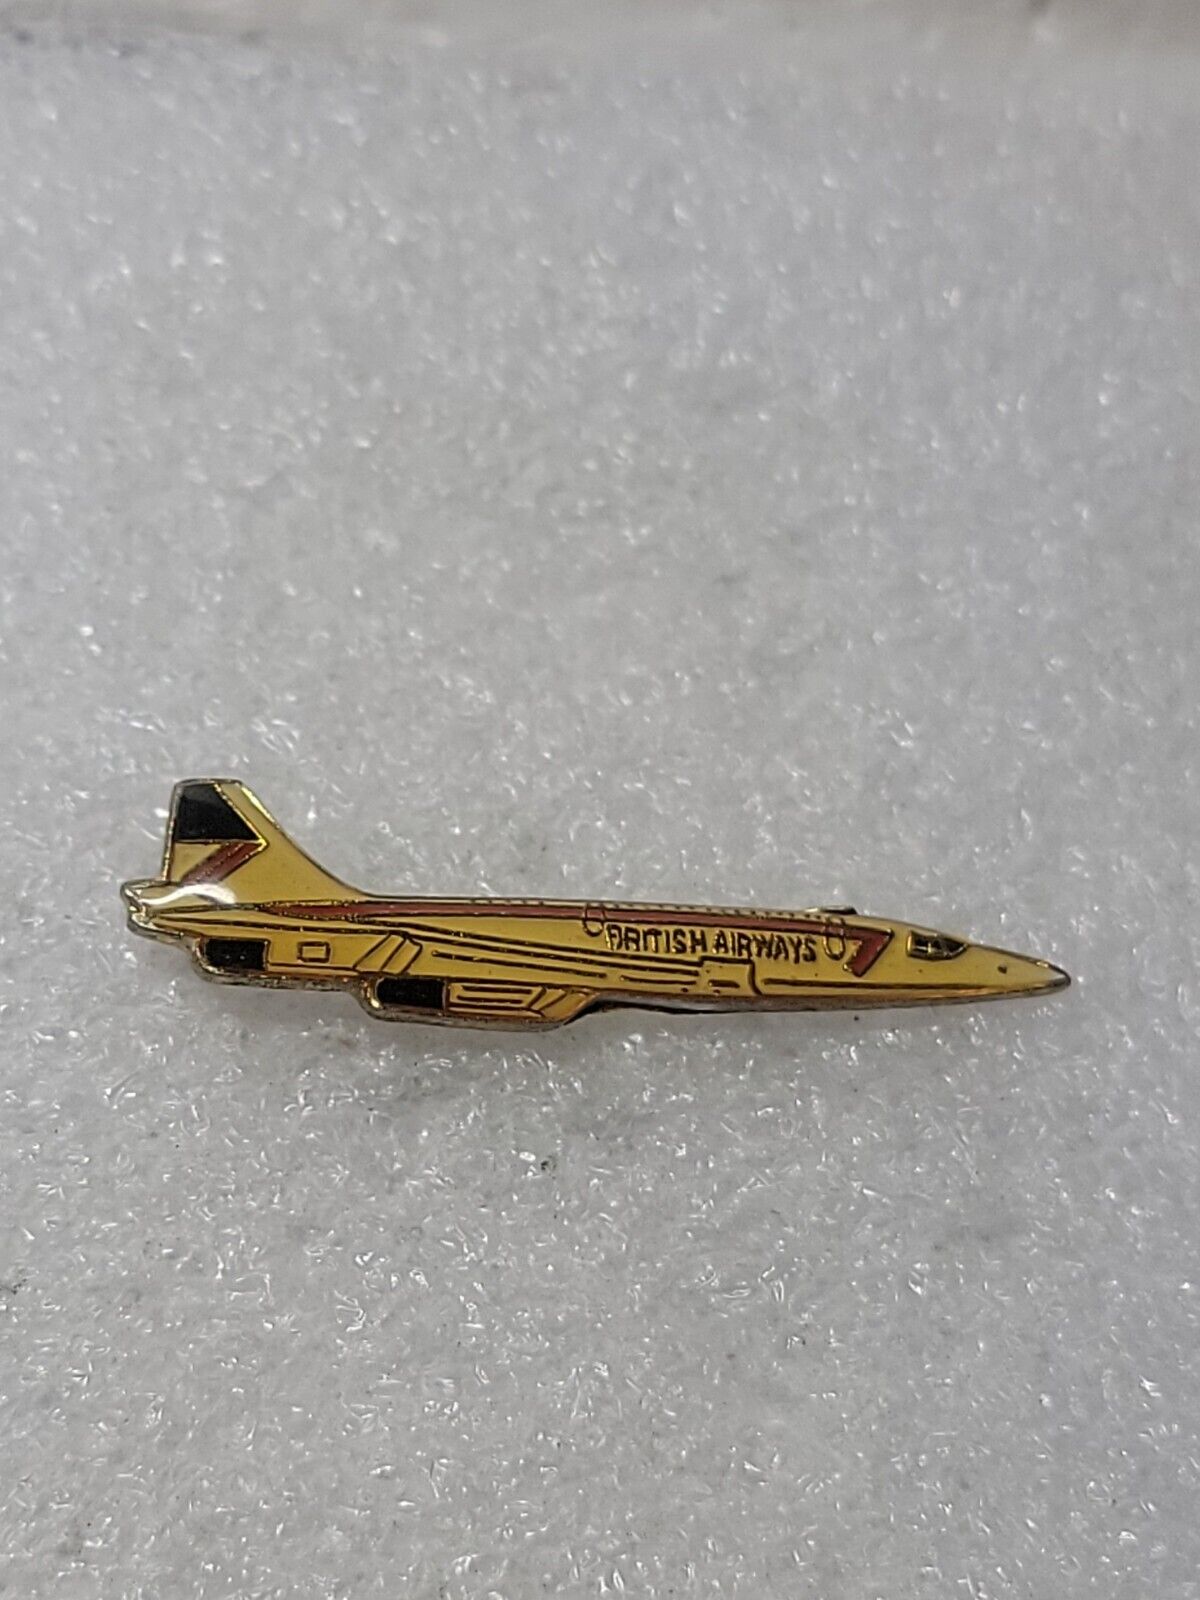 British Airways Airplane Plane Aviation Enamel Lapel Pin Vintage Clutch Back